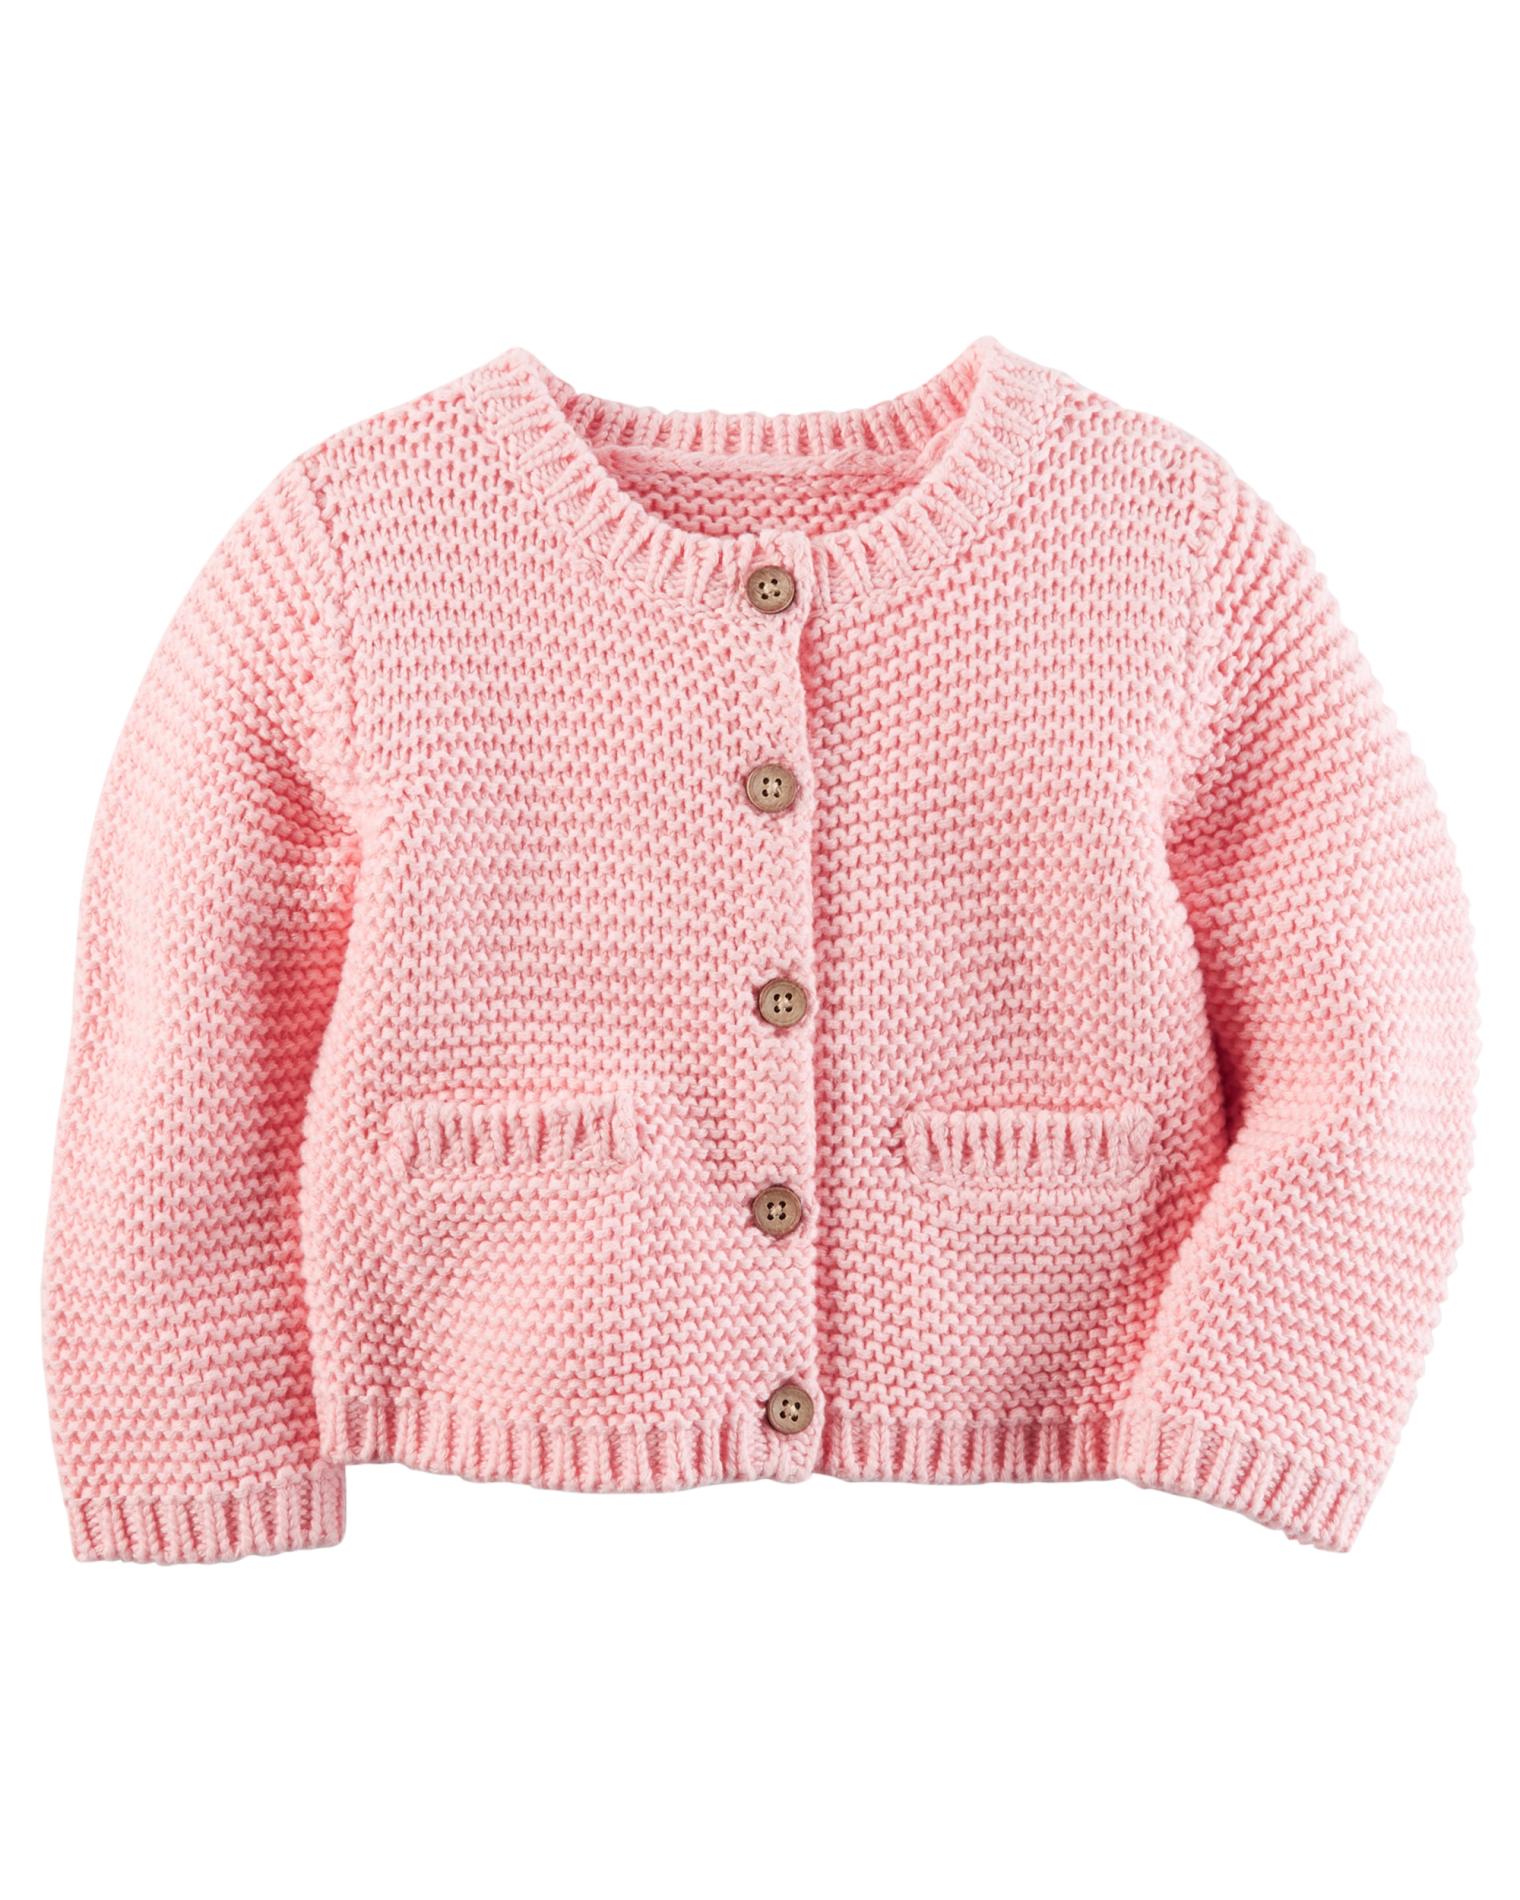 Carter's Newborn Girls' Cardigan Sweater